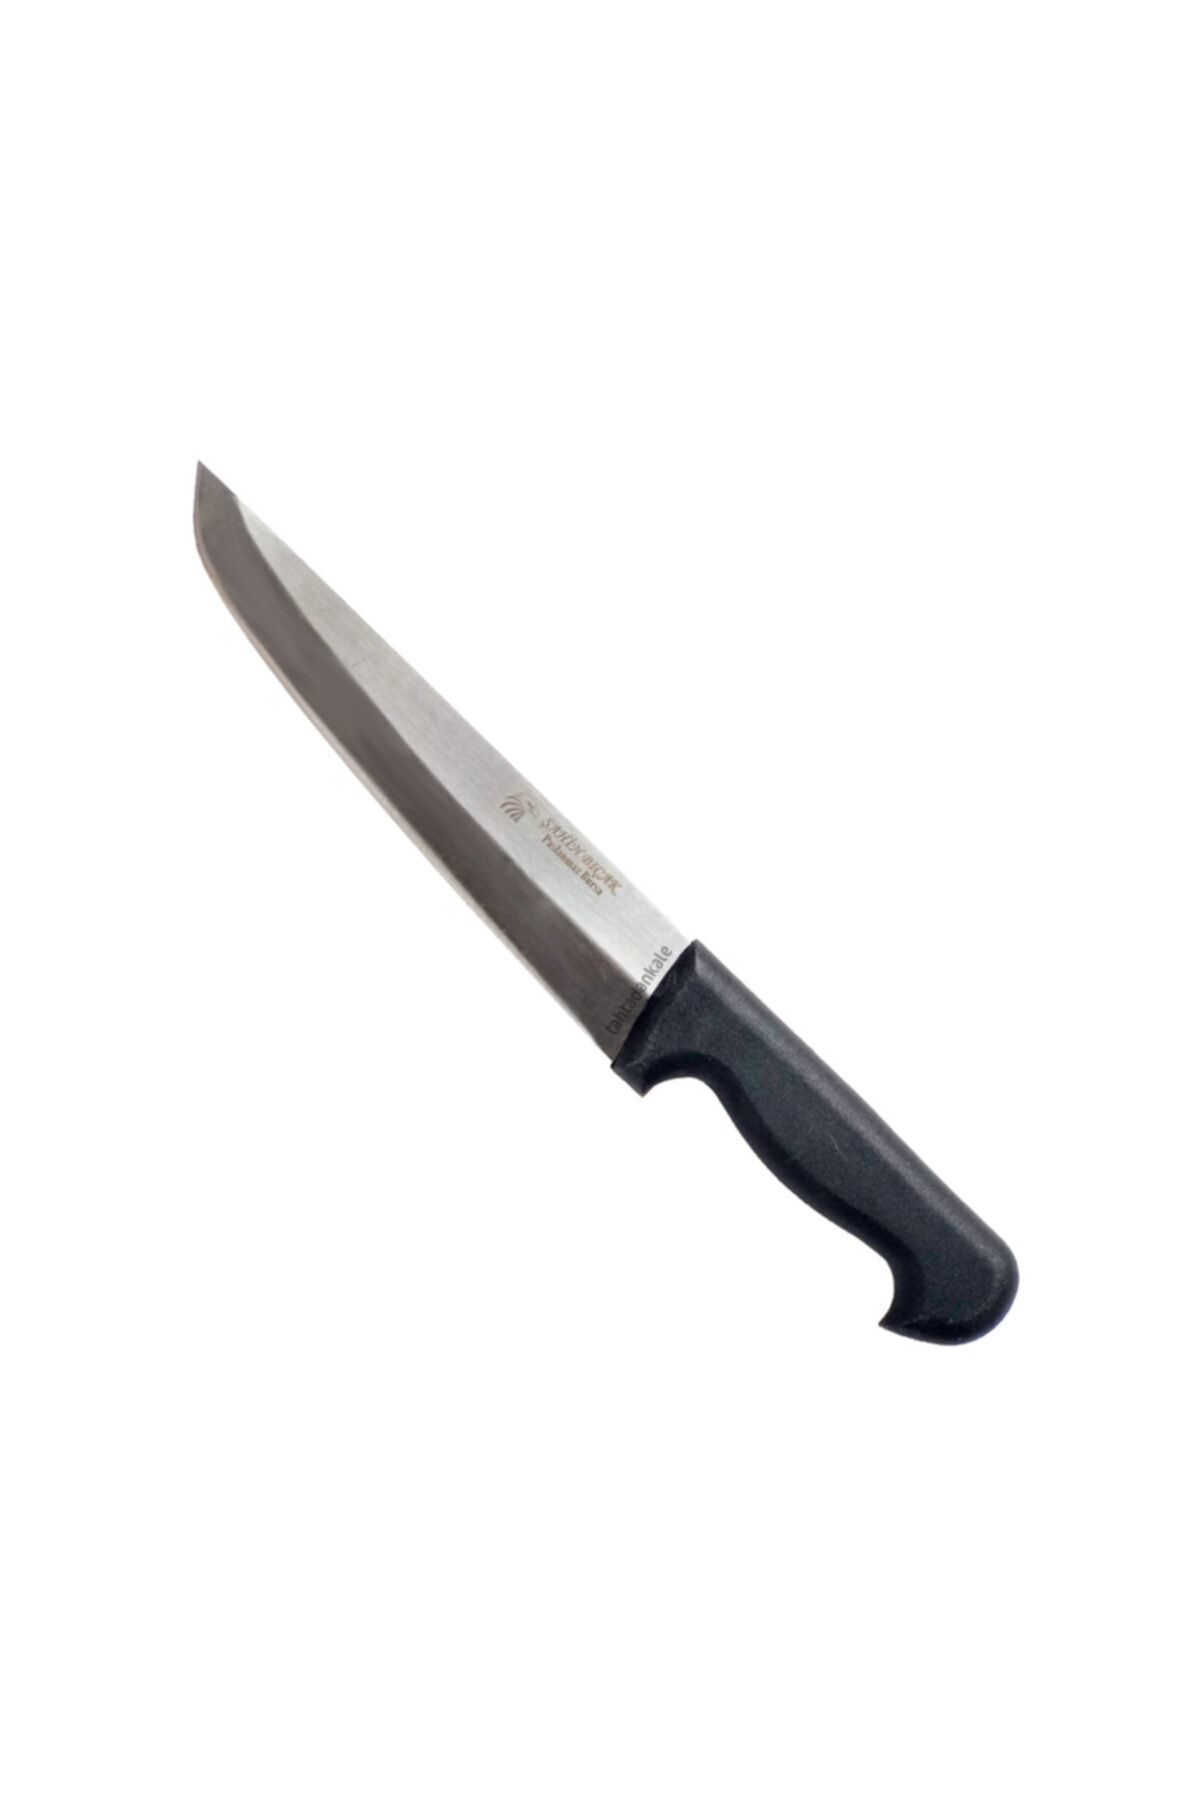 Şahin Bursa Ince Mutfak Bıçağı No:2, 16 Cm, Plastik Sap